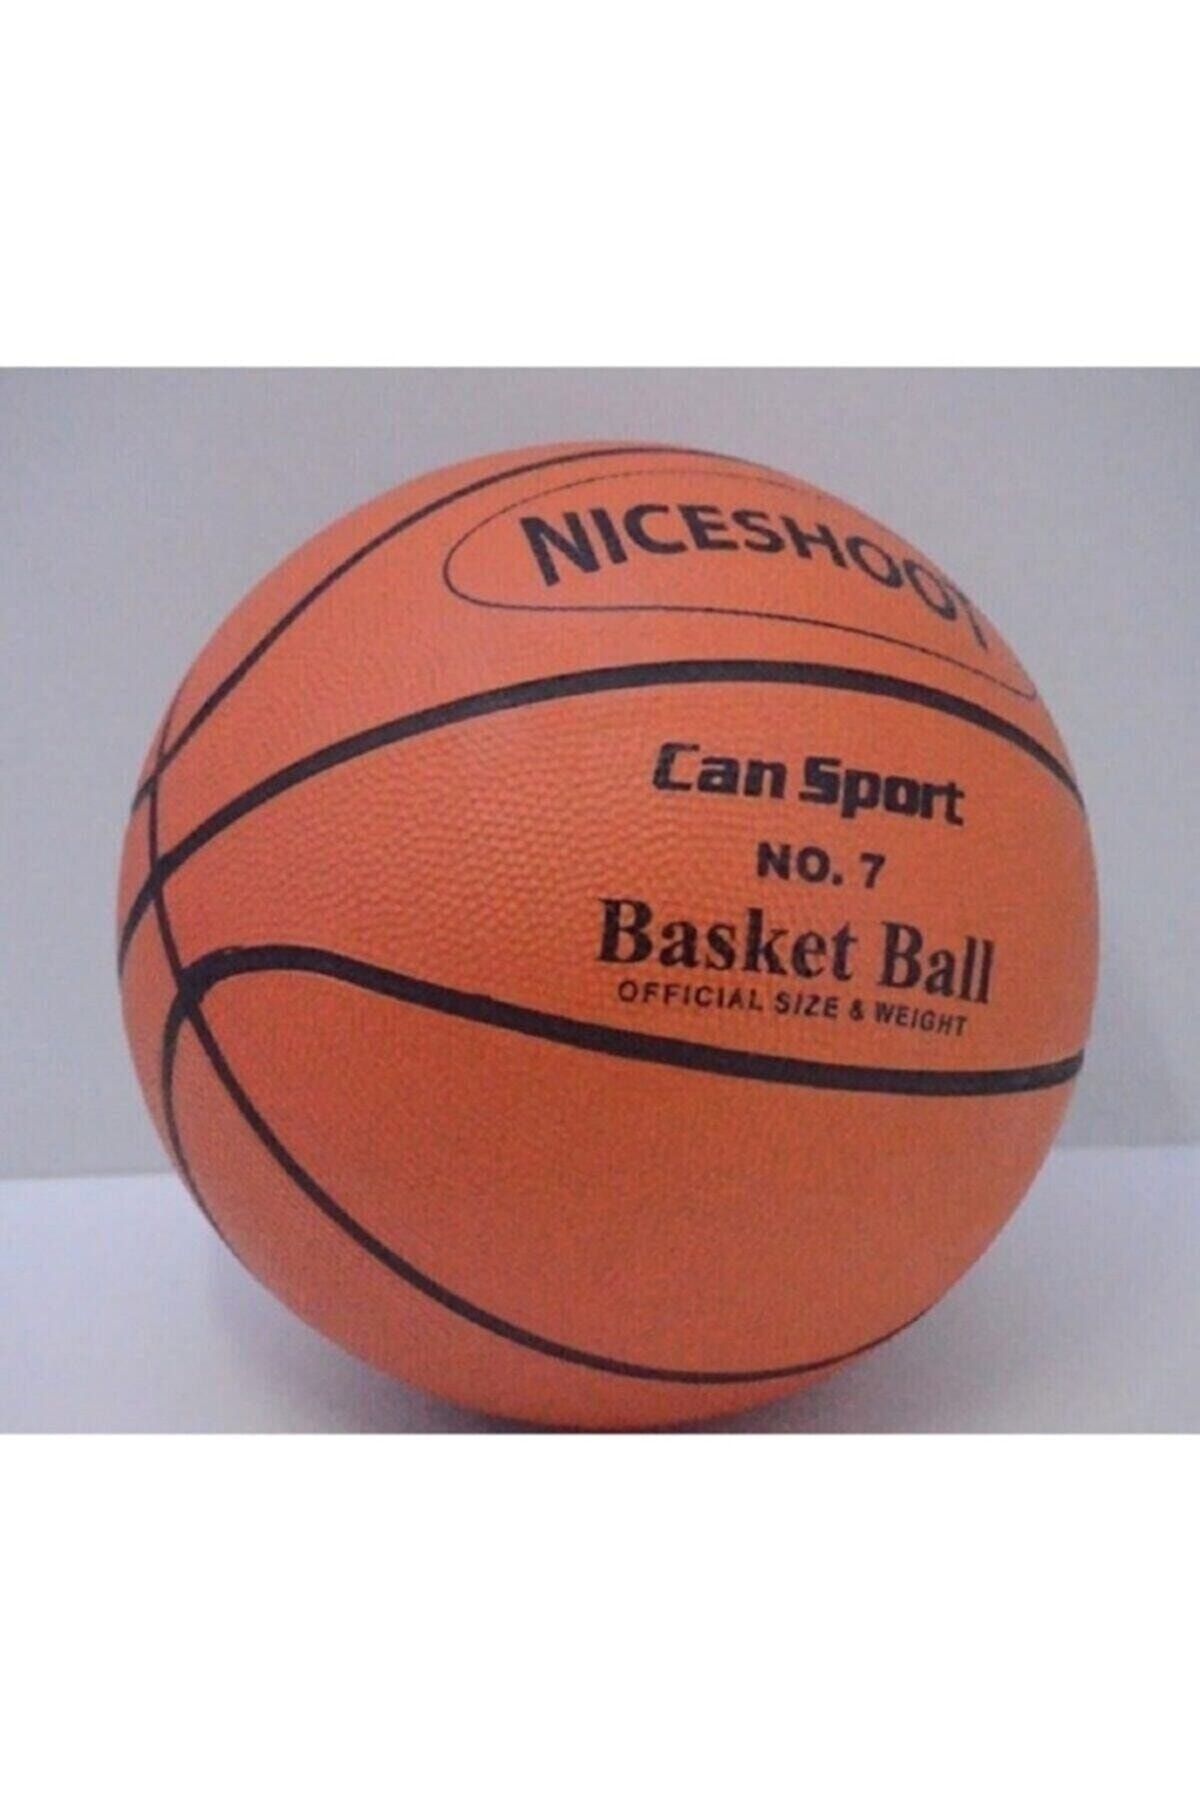 CAN Basketbol Topu %100 Kauçuktan Üretilmiştir El Kaydırmaz 1. Sınıf Kalite 7 Numara Basketbol Topu